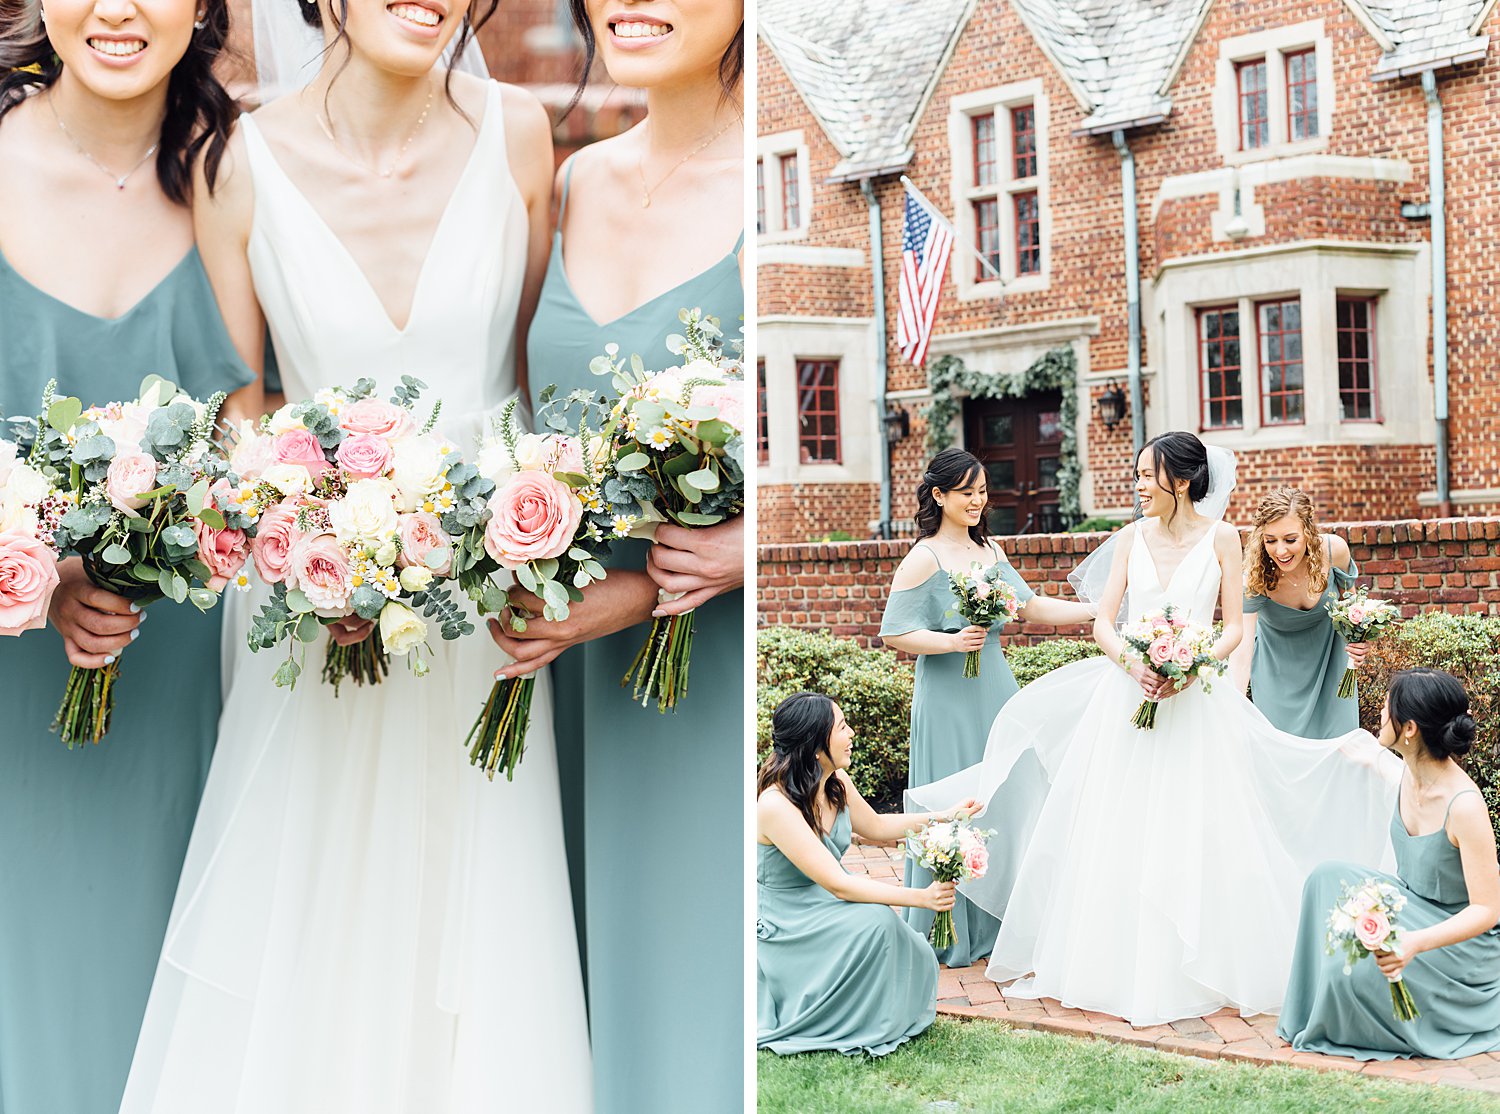 Lauren + Justin - Community House of Moorestown Wedding - Maryland Wedding Photographer - Alison Dunn Photography photo